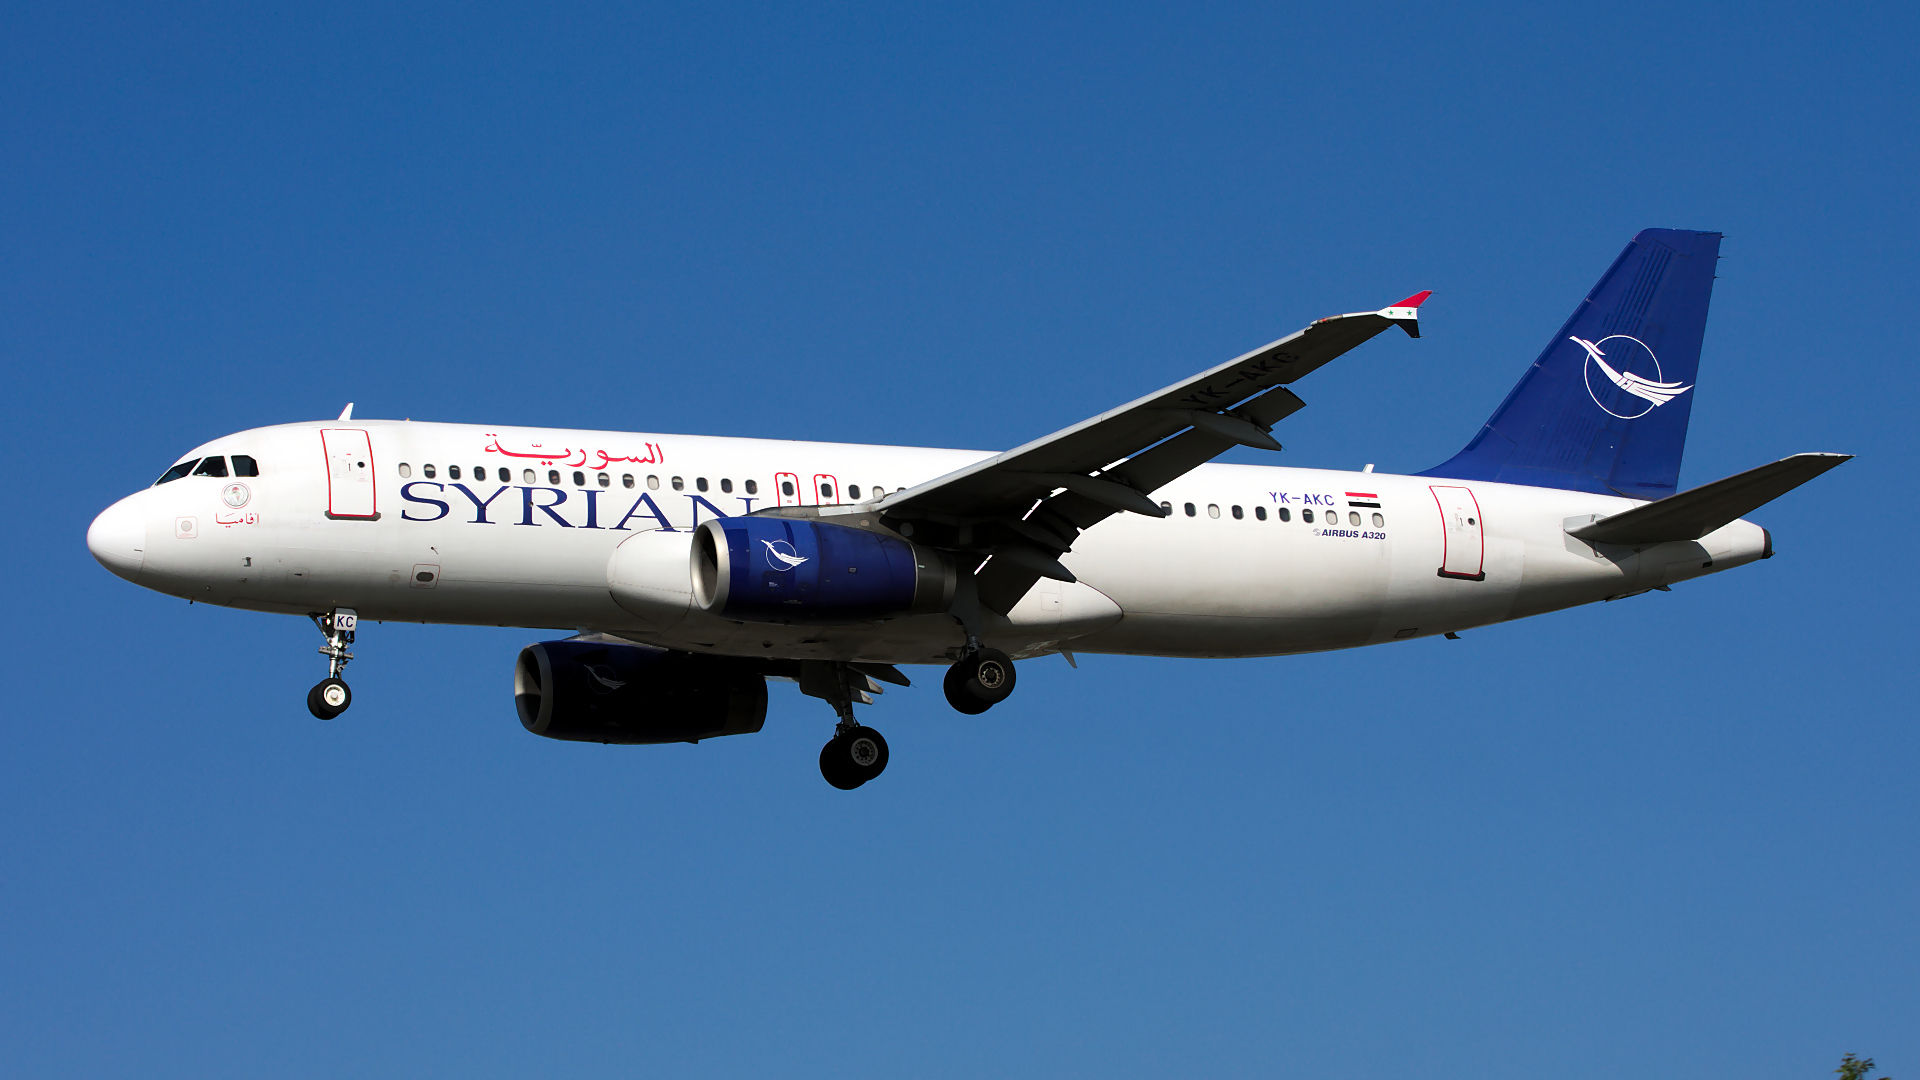 YK-AKC ✈ Syrian Arab Airlines Airbus A320-232 @ London-Heathrow